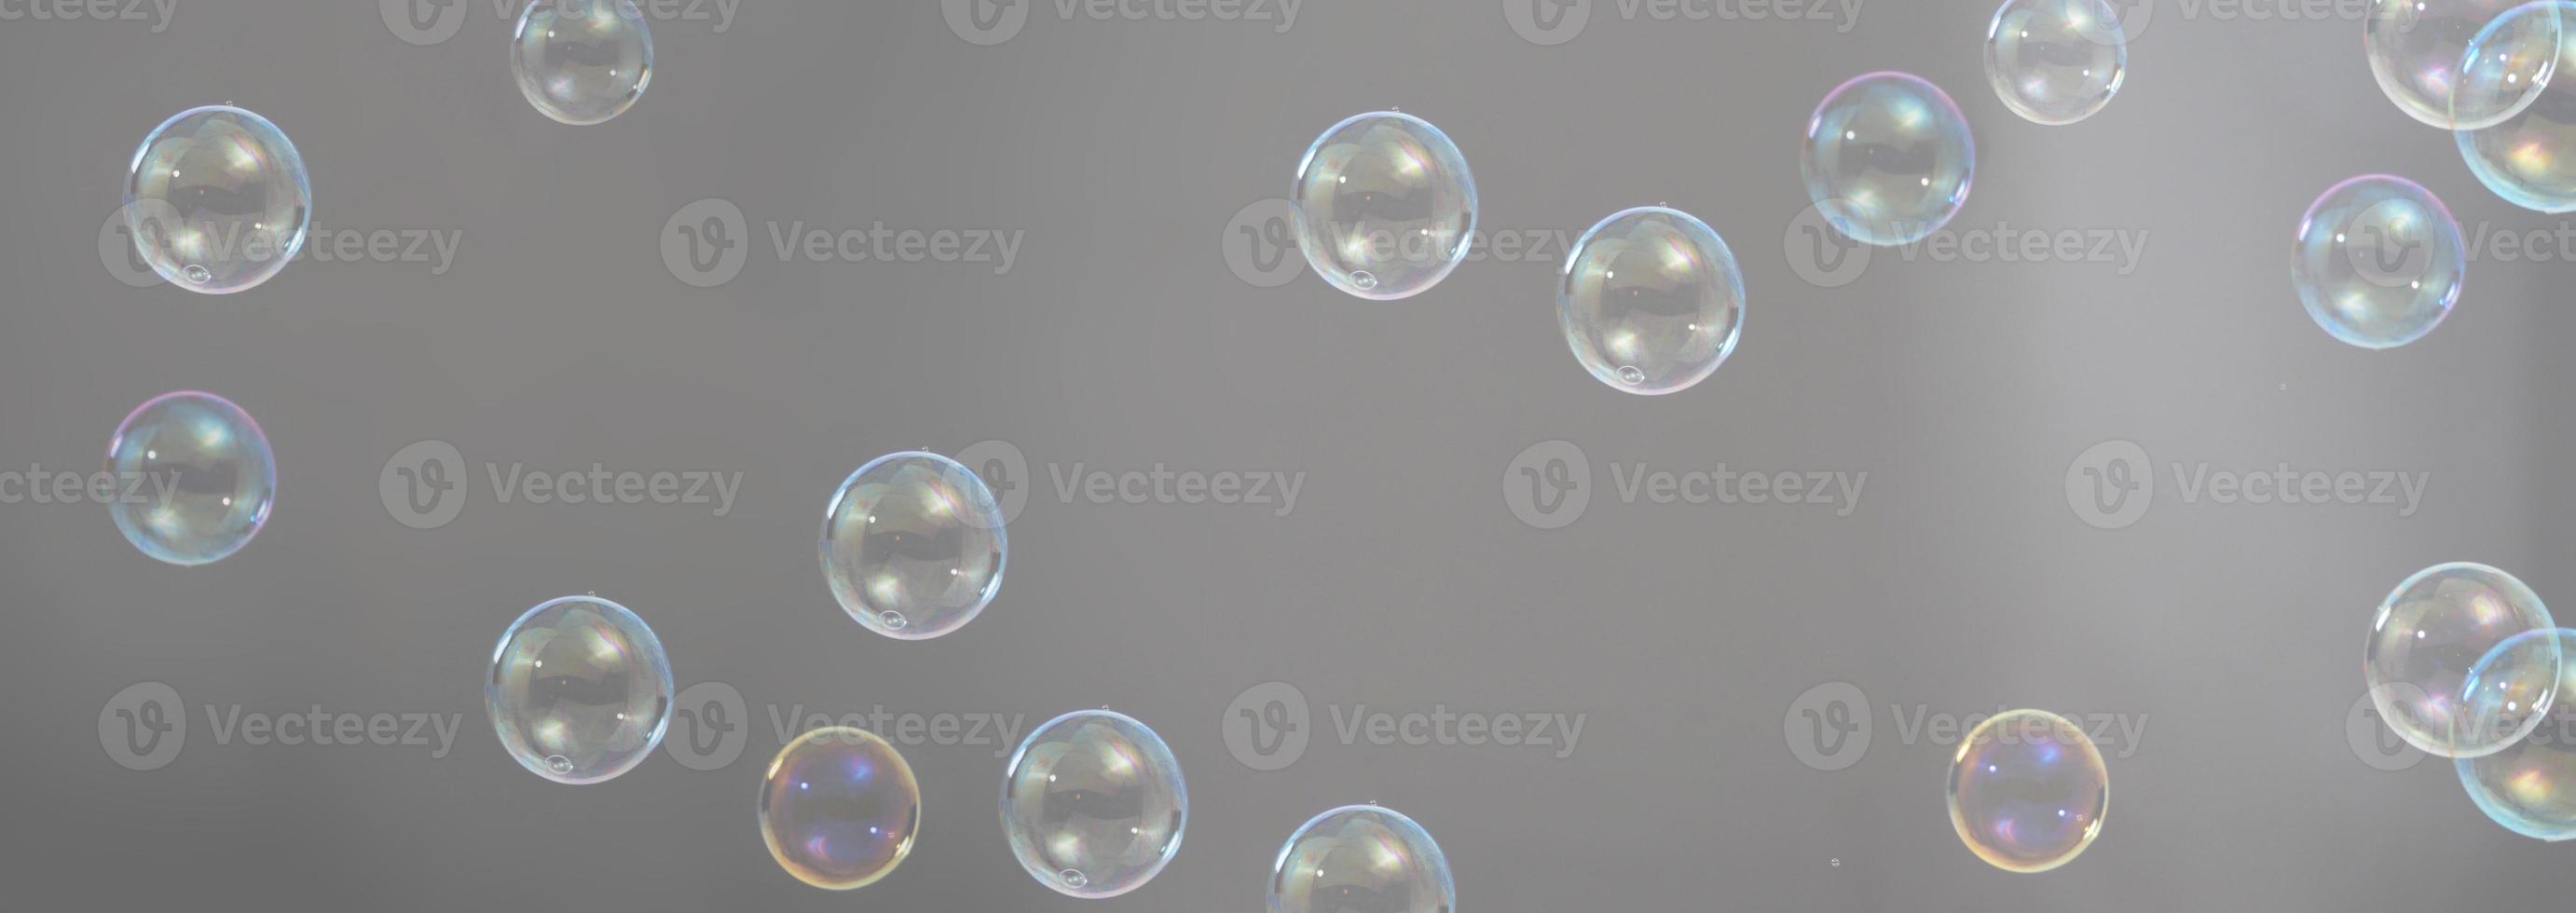 zeepbel druppel of shampoo bubbels zweven als vliegen in de lucht foto